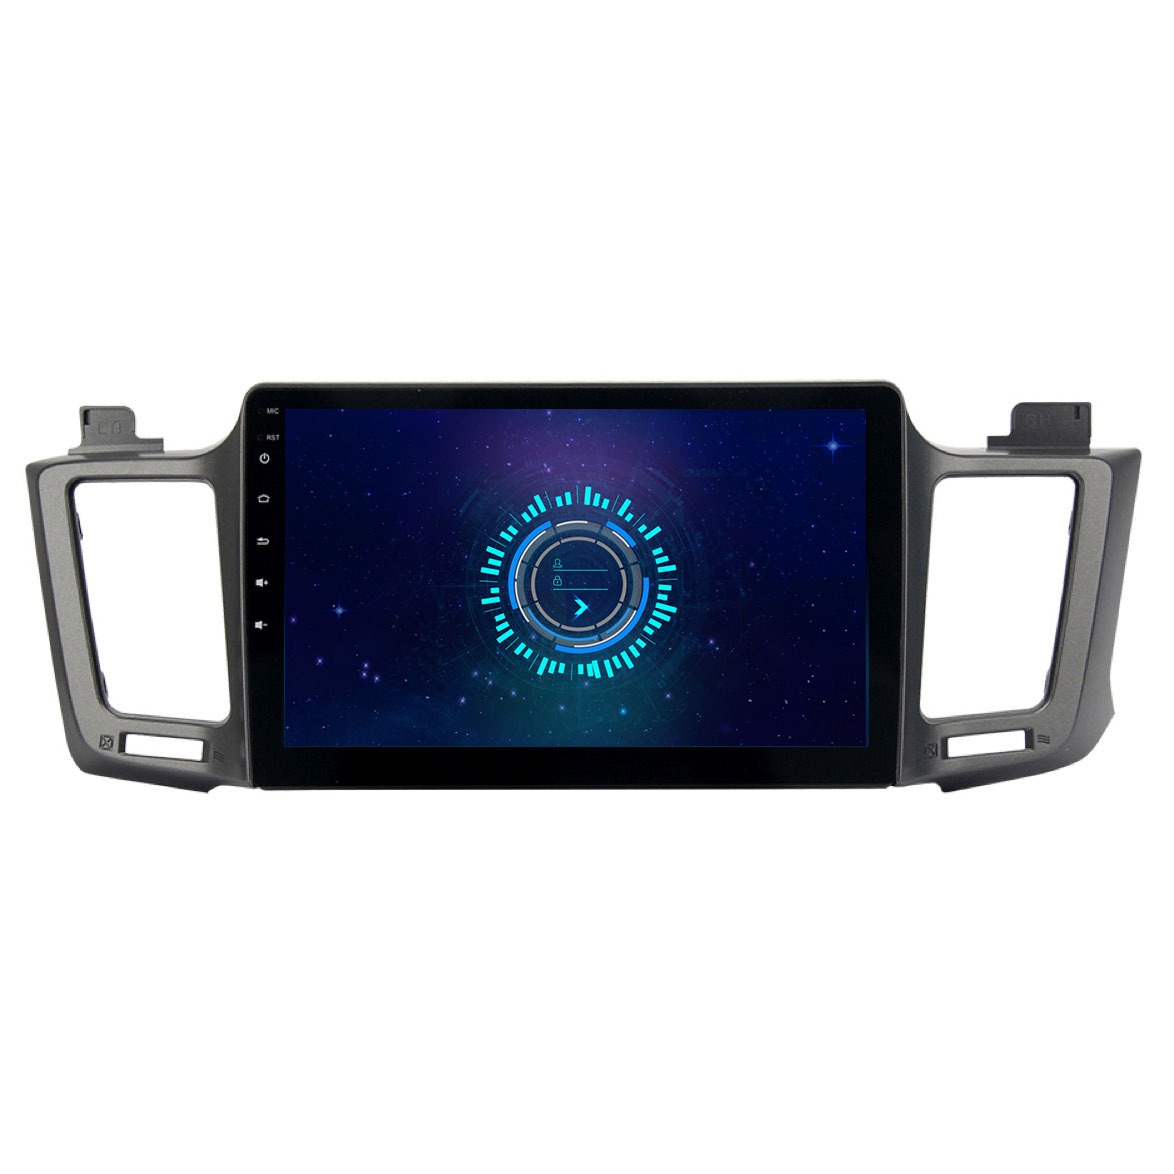 SYGAV 10.2 אינץ' רדיו סטריאו לרכב אנדרואיד עבור 2013-2018 טויוטה RAV4 / אלחוטי CarPlay WiFi Bluetooth תמונה מוצגת